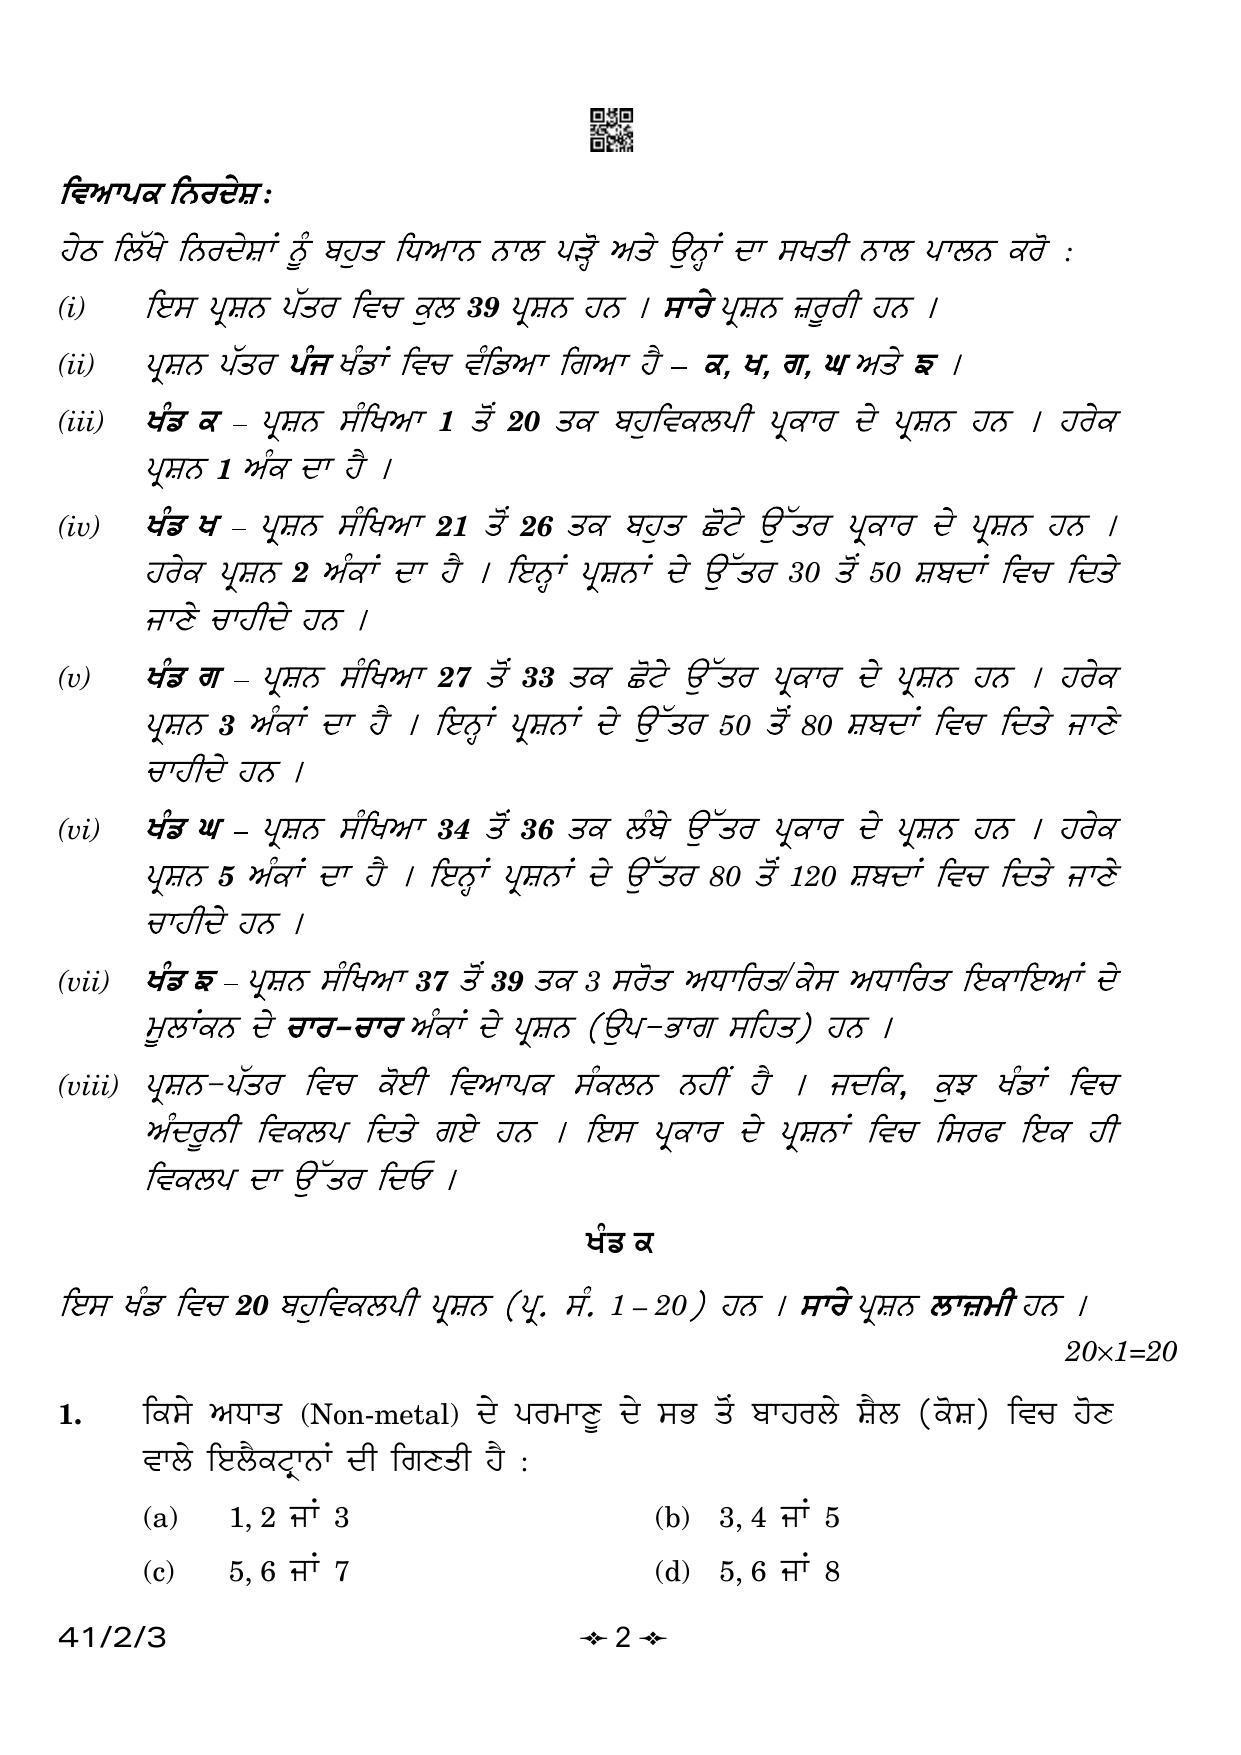 CBSE Class 10 41-2-3 Science Punjabi Version 2023 Question Paper - Page 2